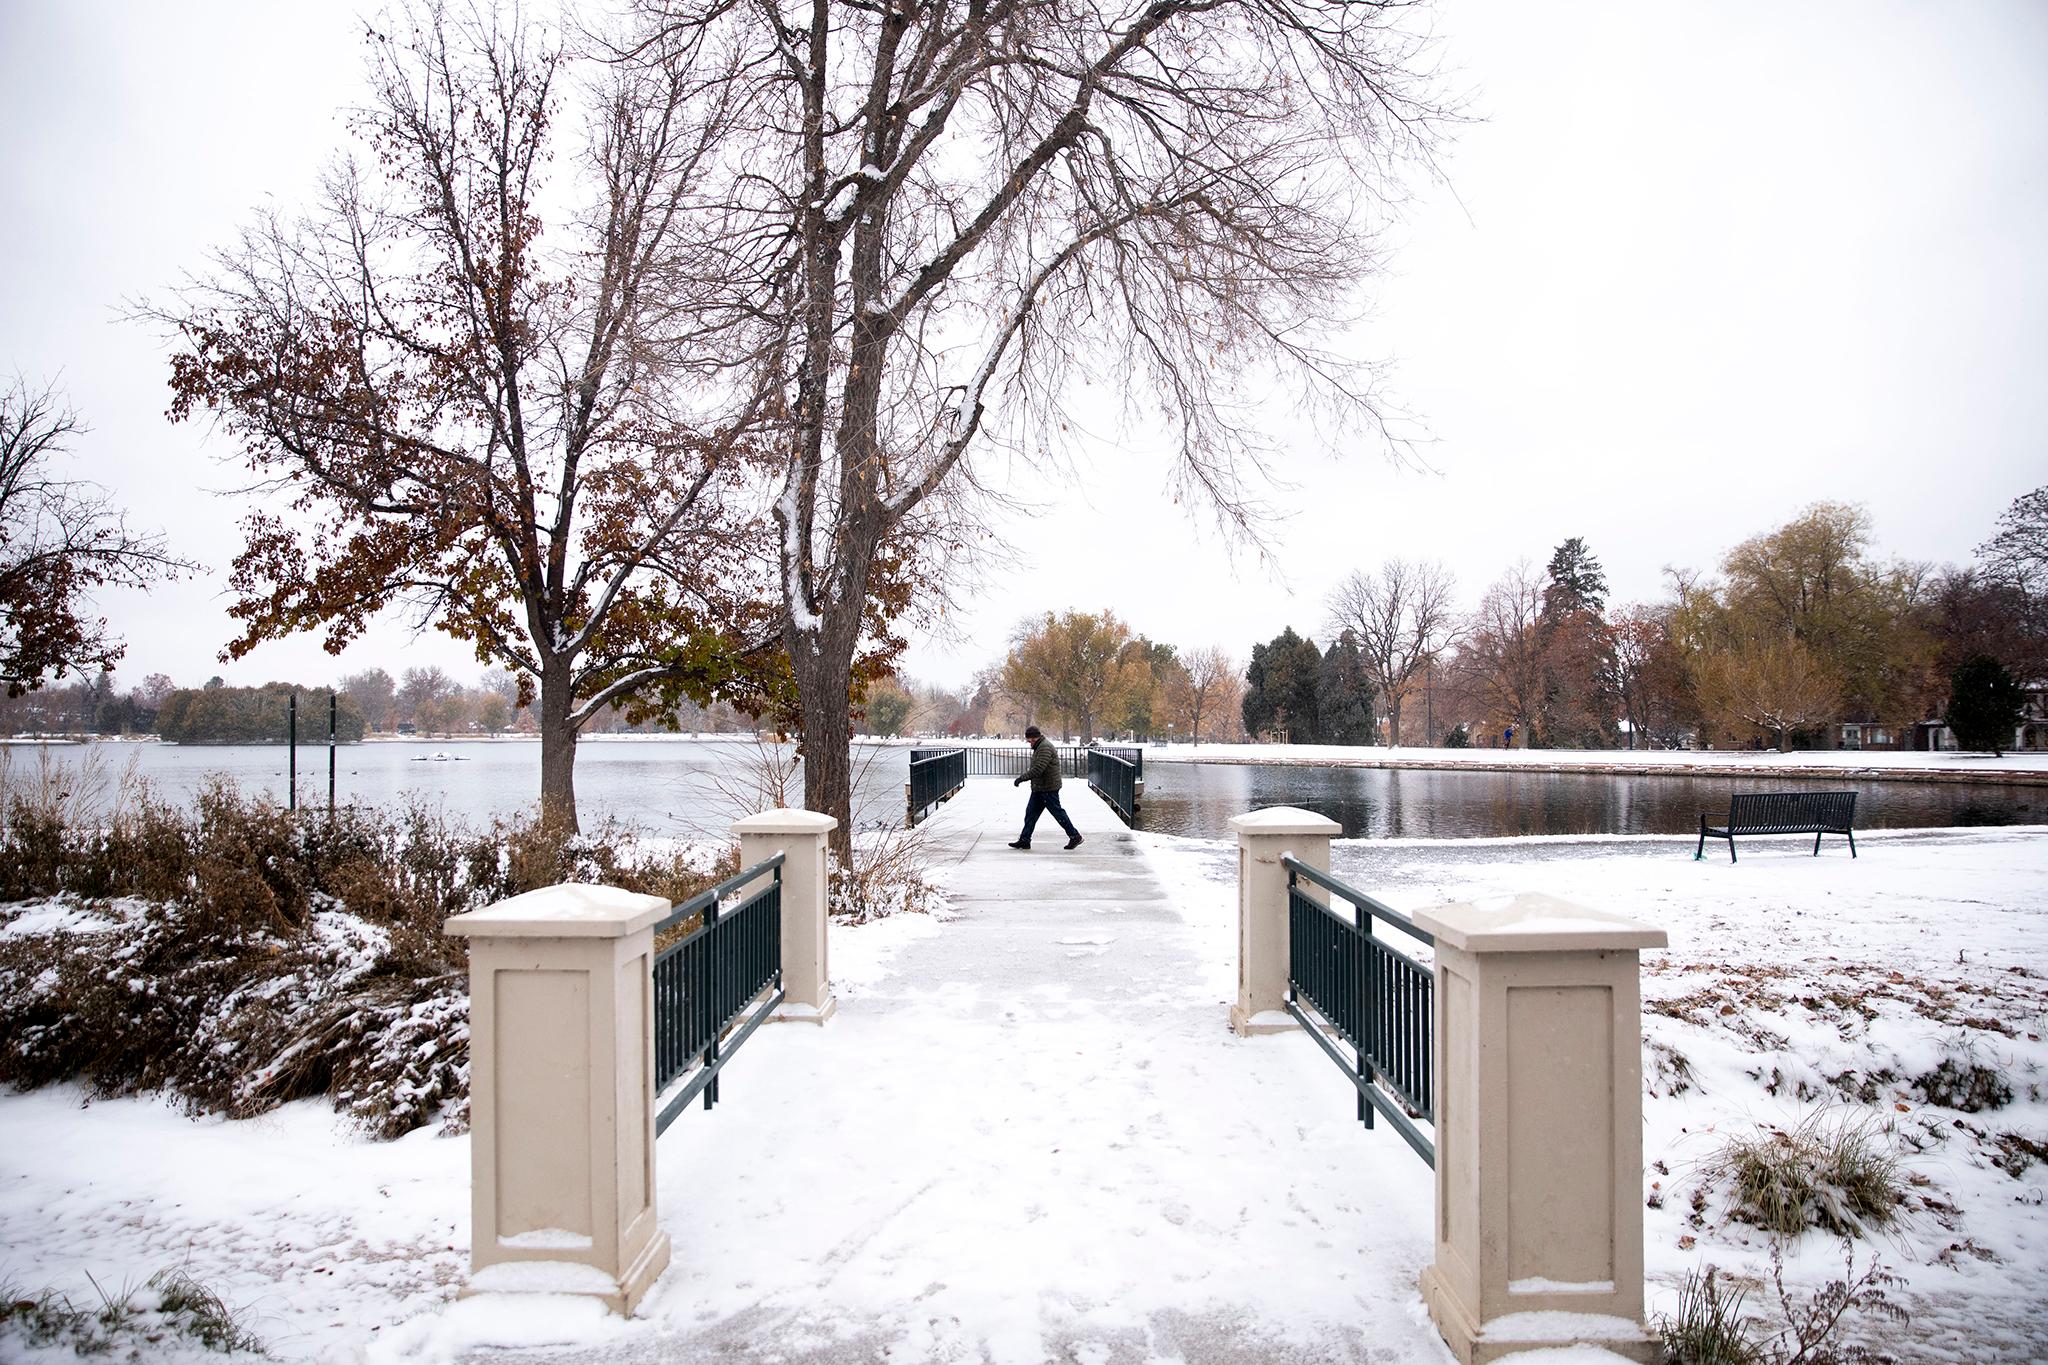 A snowy day at Washington Park. Nov. 17, 2022.